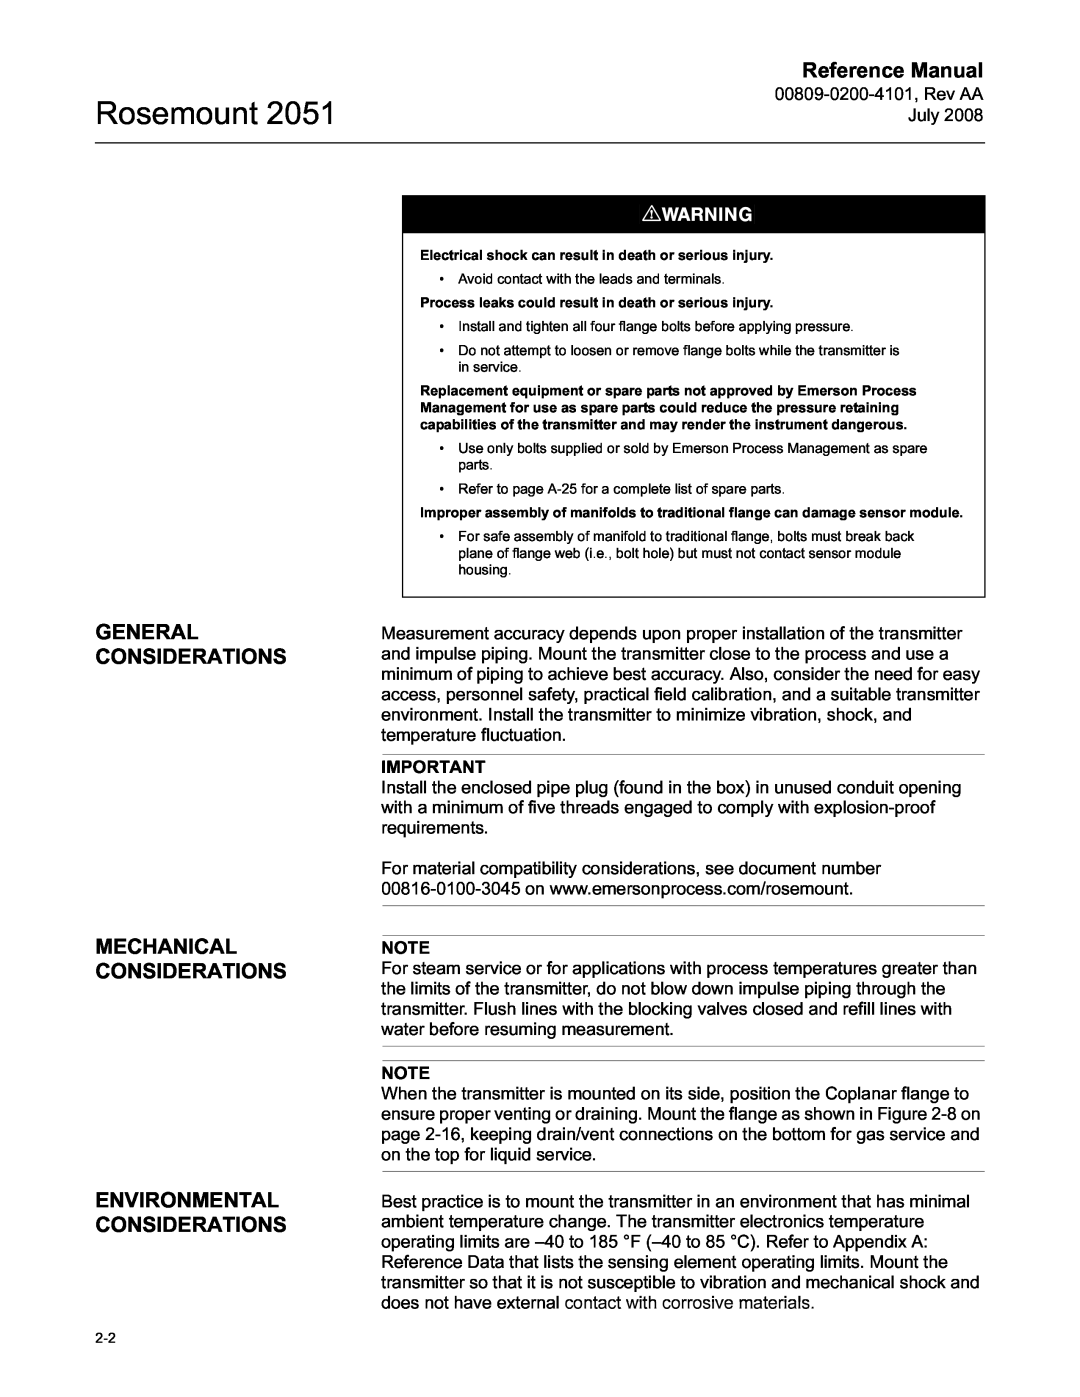 Emerson Process Management 2051 manual General, Considerations, Mechanical, Environmental, Rosemount, Reference Manual 